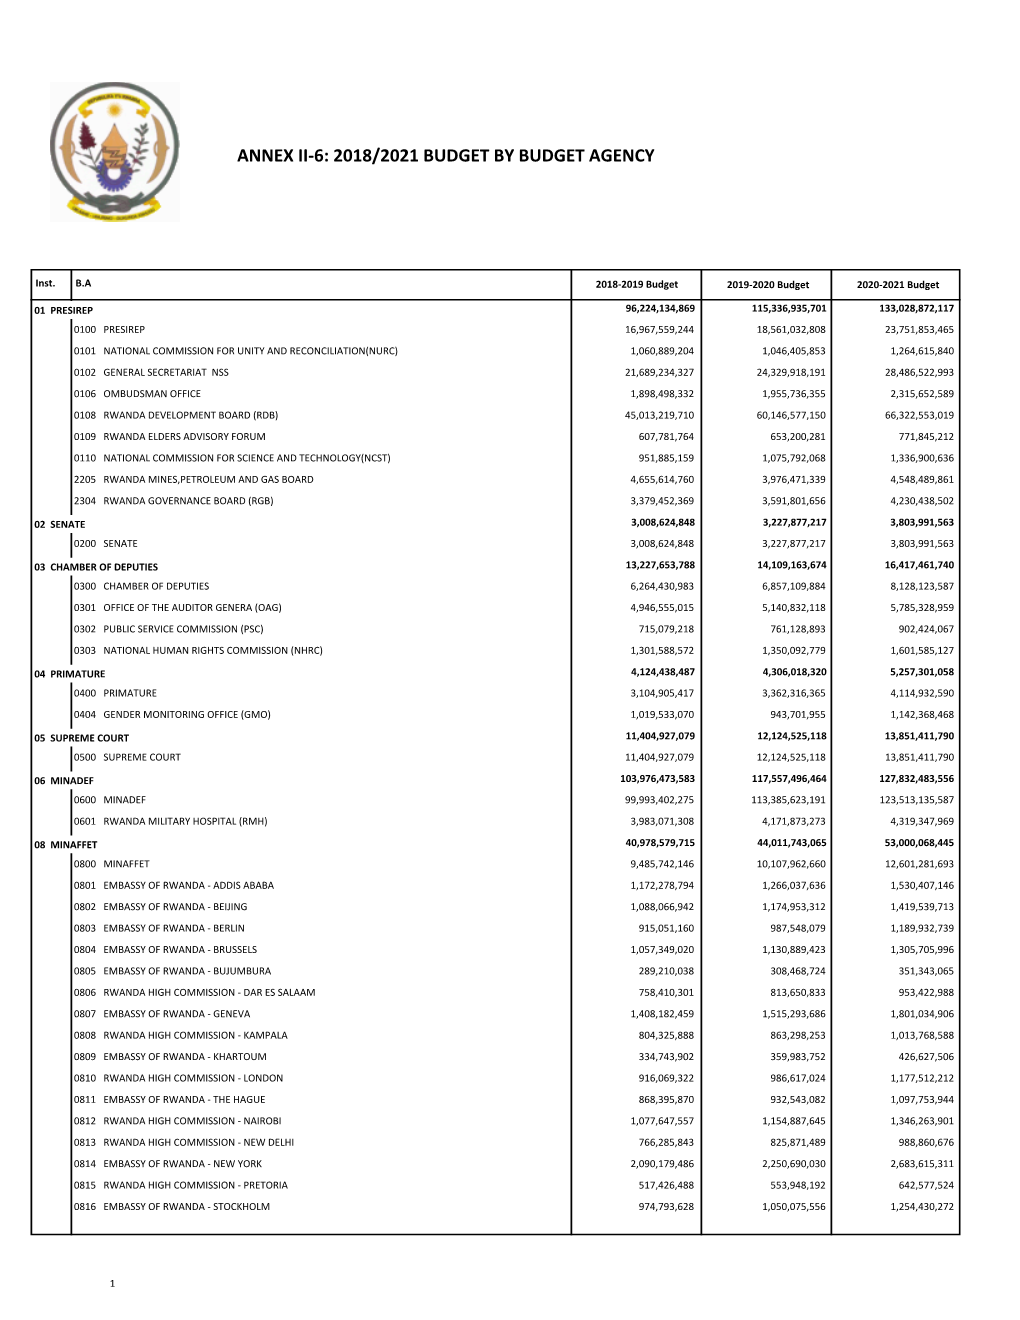 Annex Ii-6: 2018/2021 Budget by Budget Agency